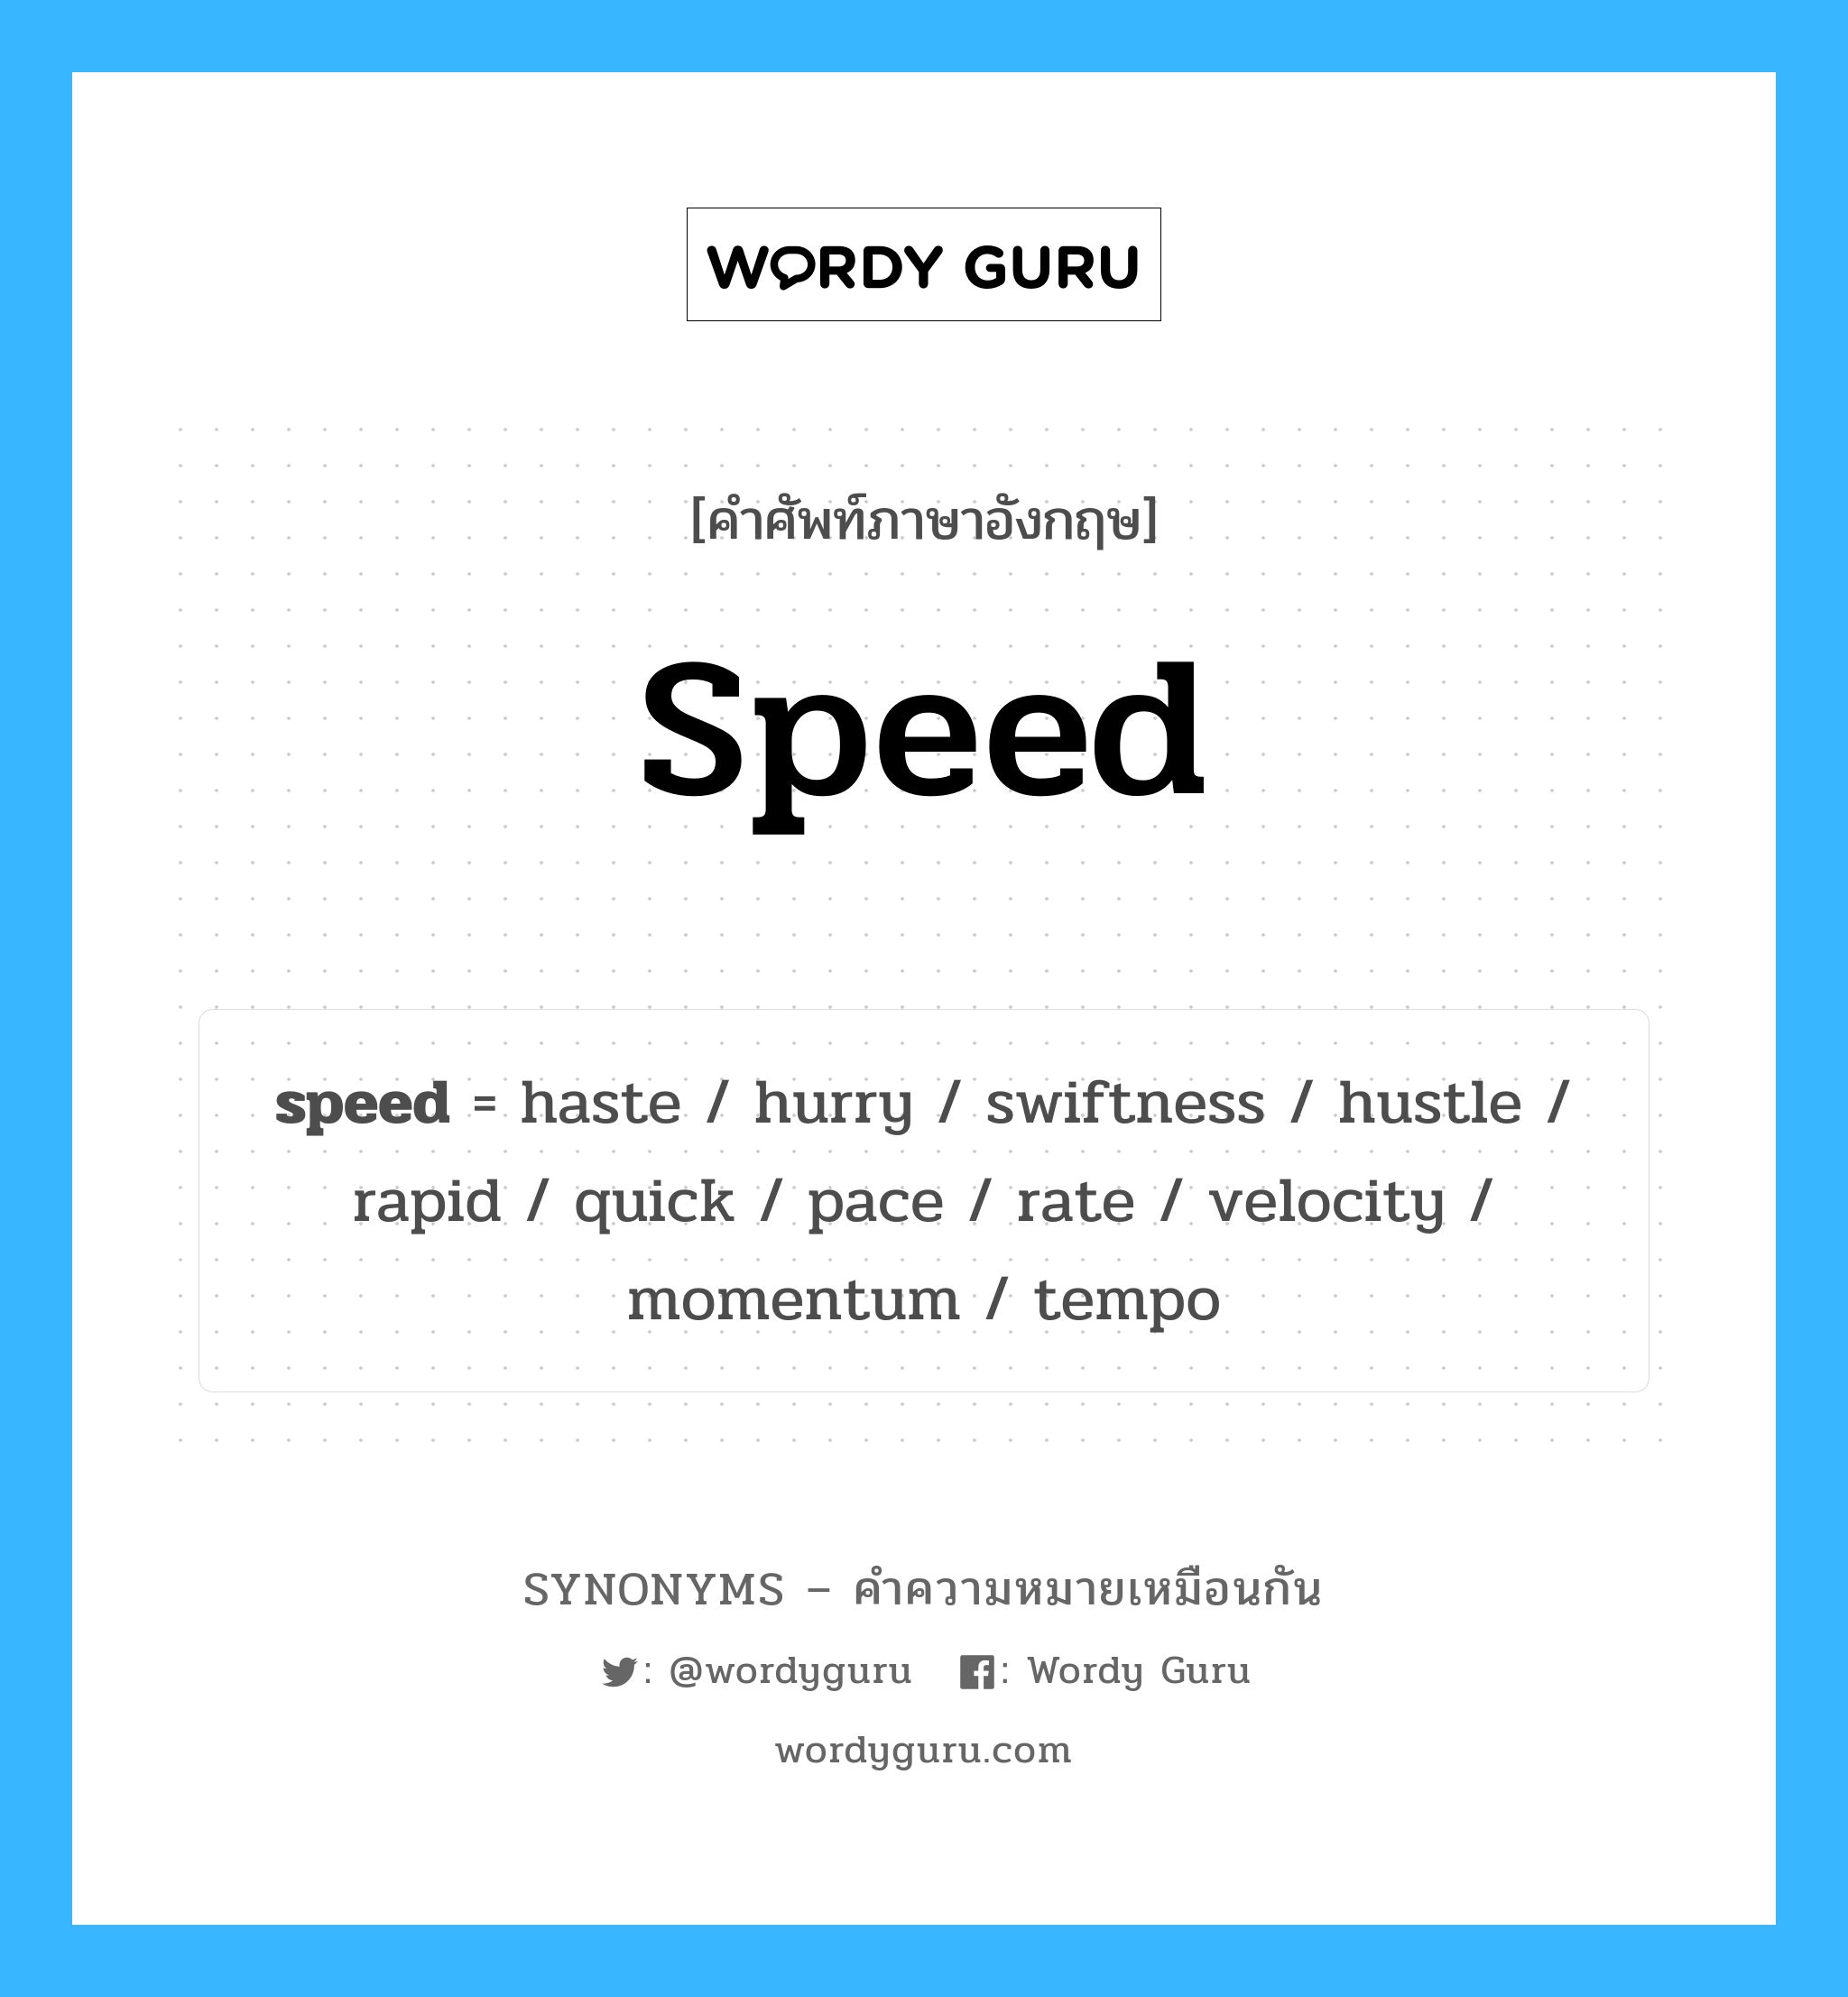 quick เป็นหนึ่งใน speed และมีคำอื่น ๆ อีกดังนี้, คำศัพท์ภาษาอังกฤษ quick ความหมายคล้ายกันกับ speed แปลว่า อย่างรวดเร็ว หมวด speed